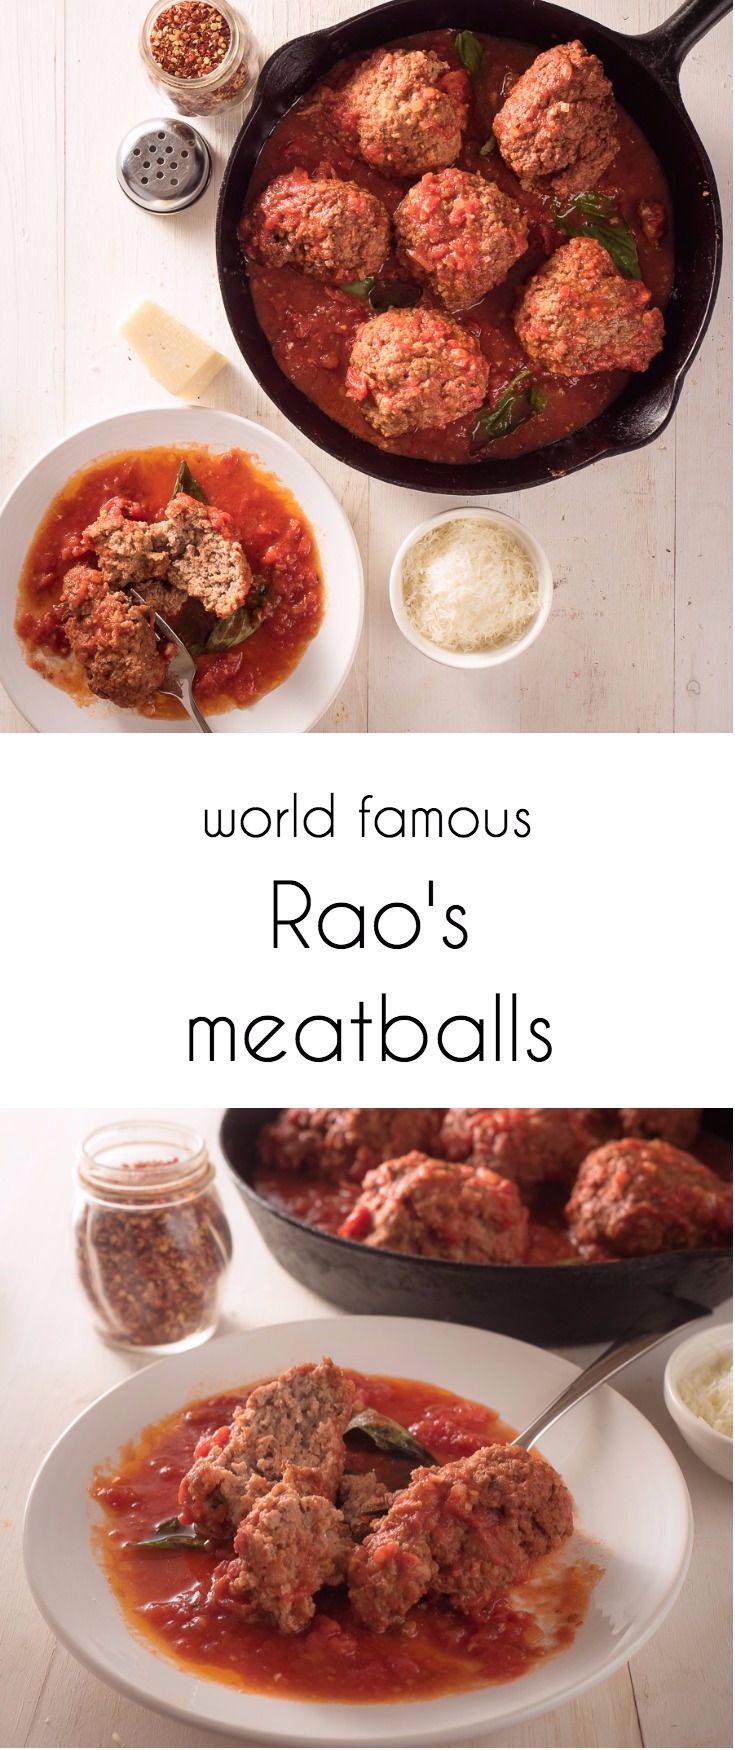 Raos meatballs in marinara are world famous for a reason